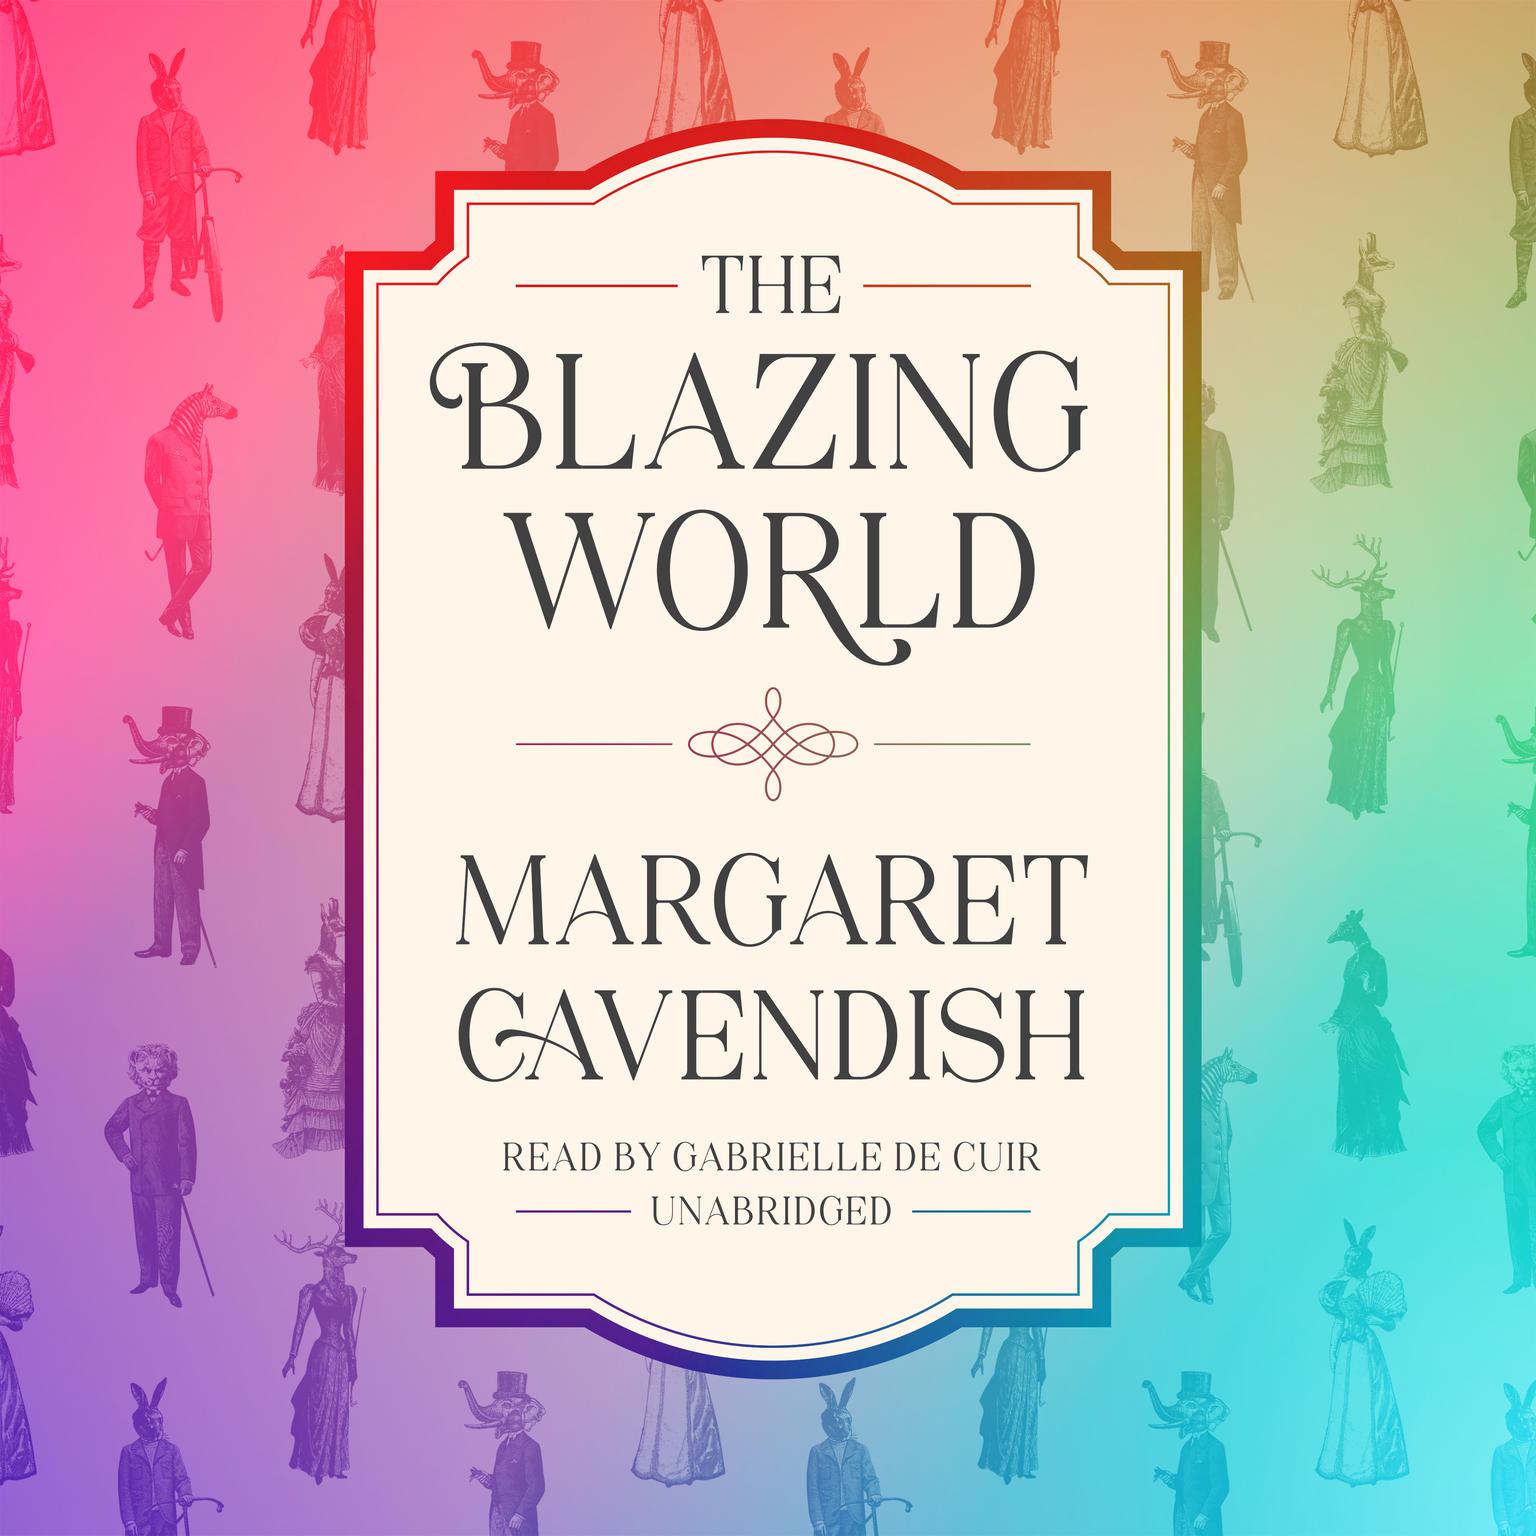 The Blazing World Audiobook, by Margaret Cavendish